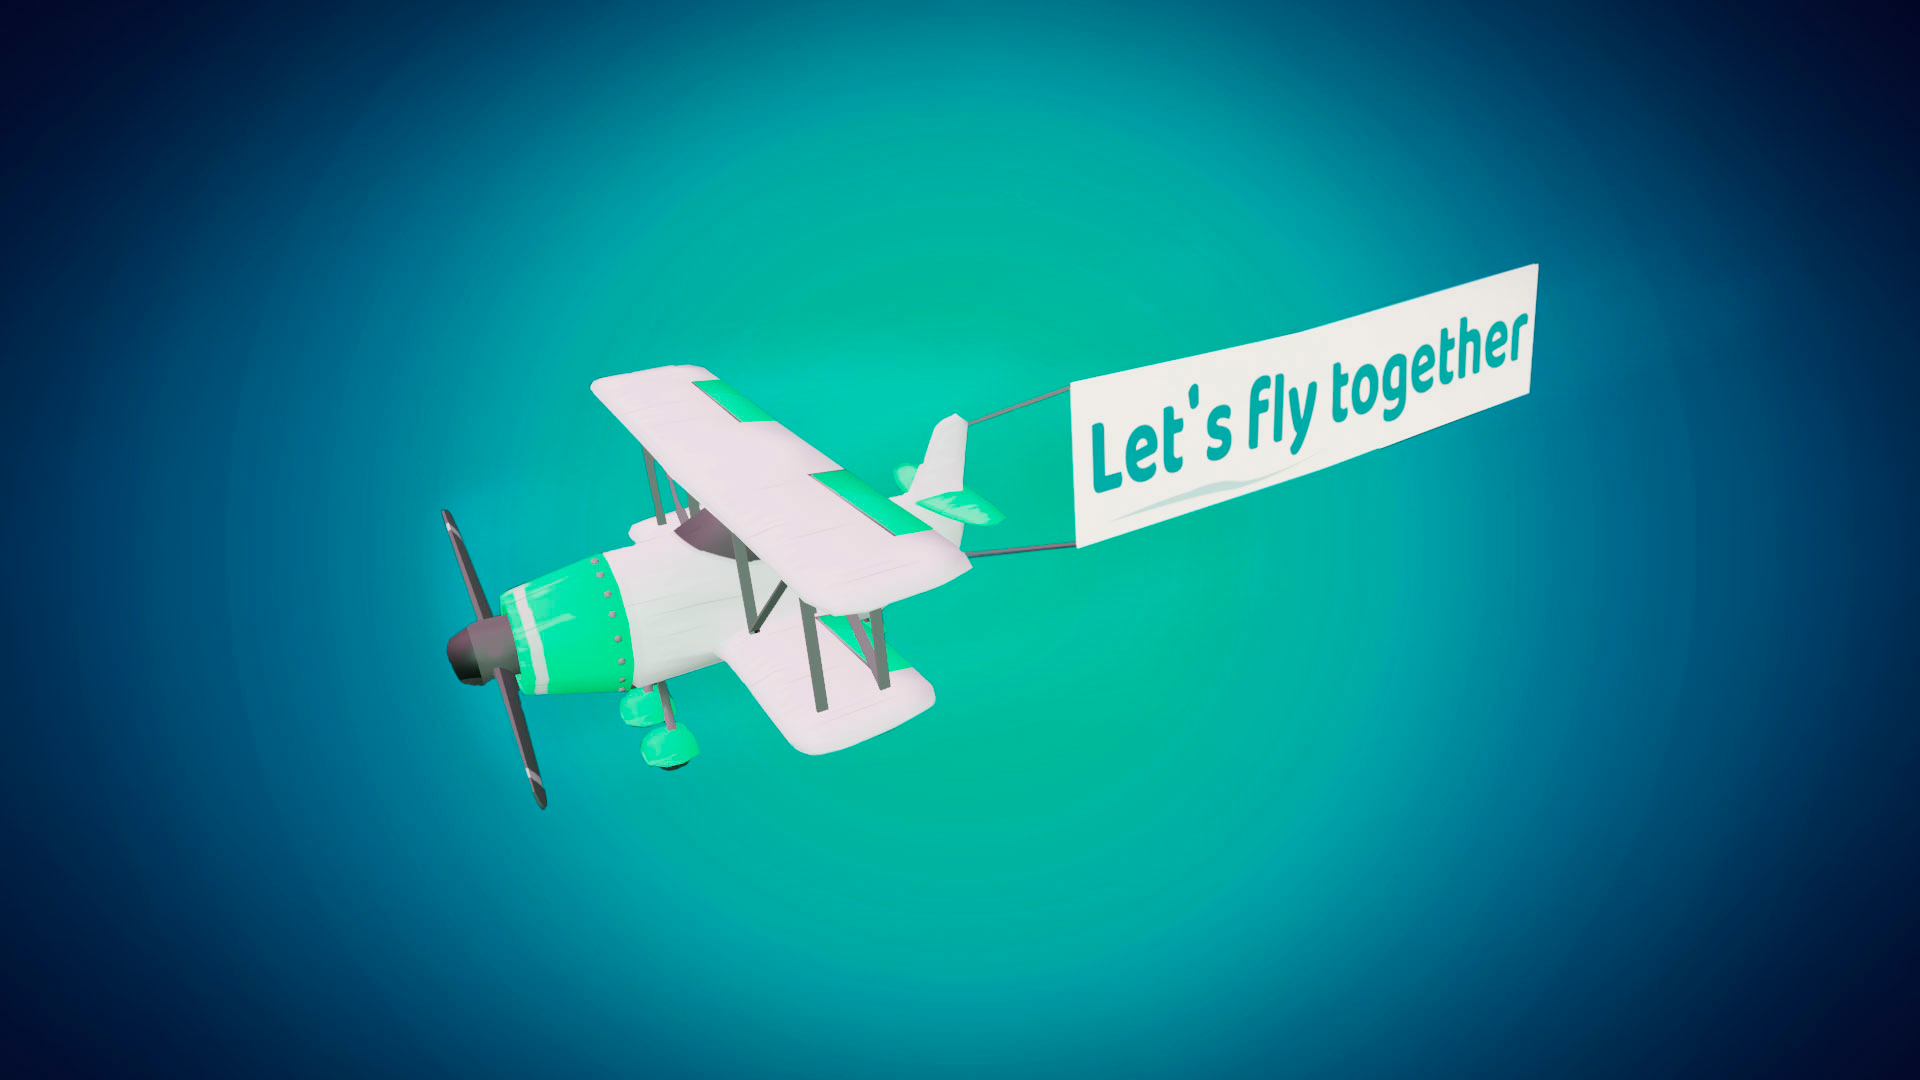 Let's fly together